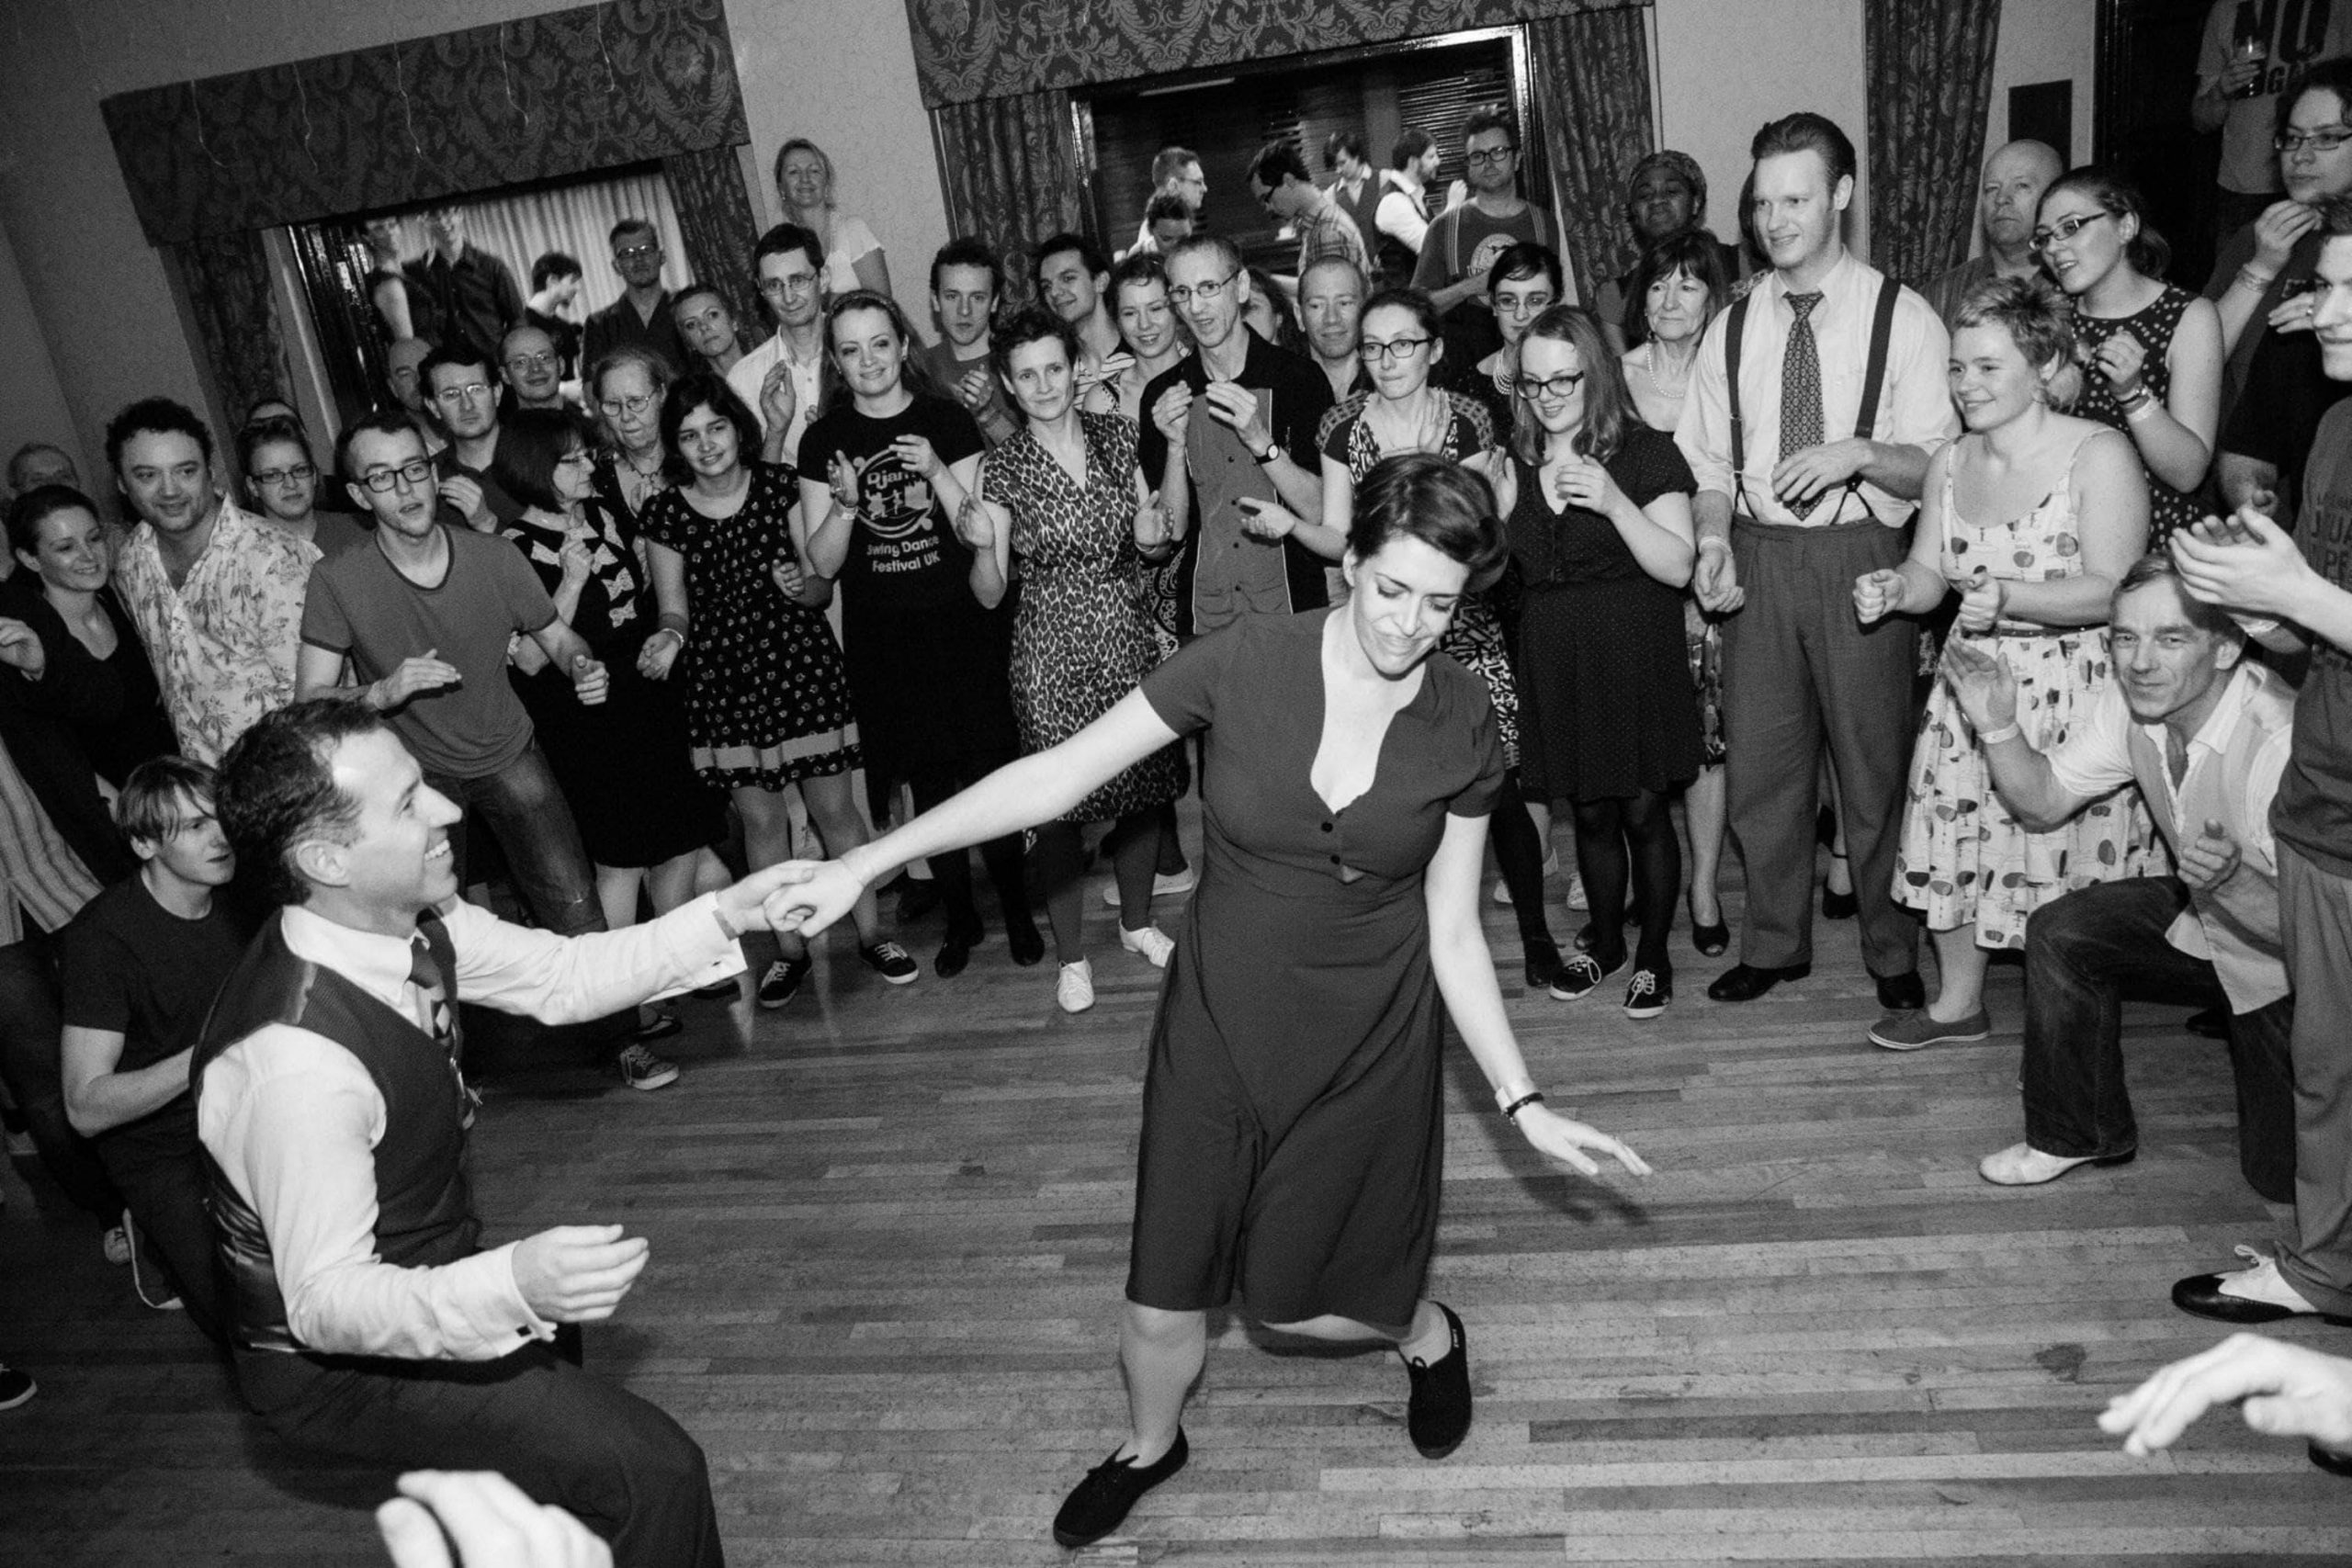 Swing Dancing Party - Swinging London in UK